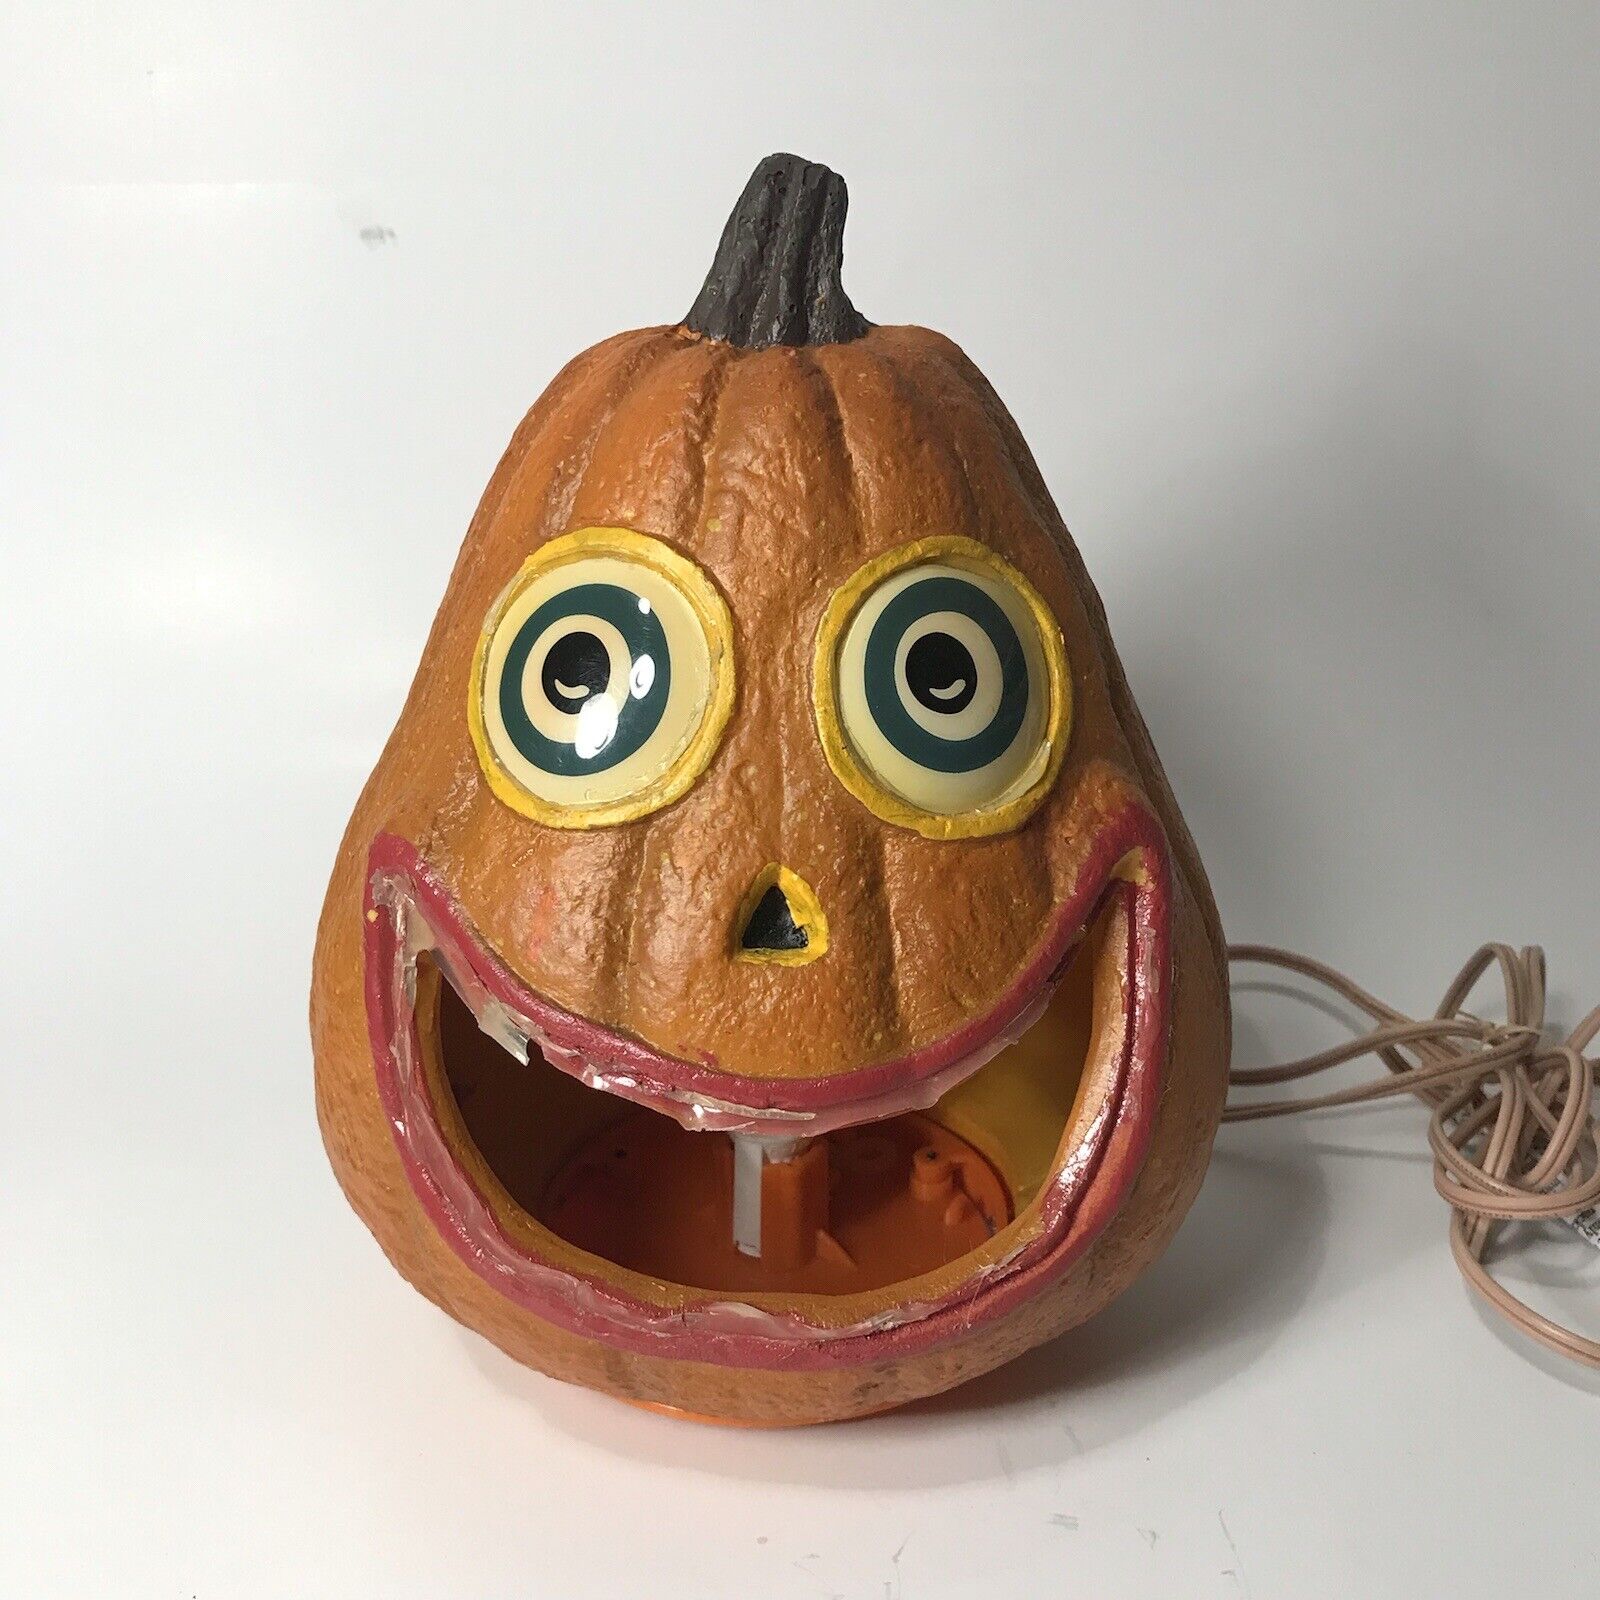 Vintage Gemmy Foam Light Up Creepy Pumpkin Halloween Decor Missing Teeth 9”